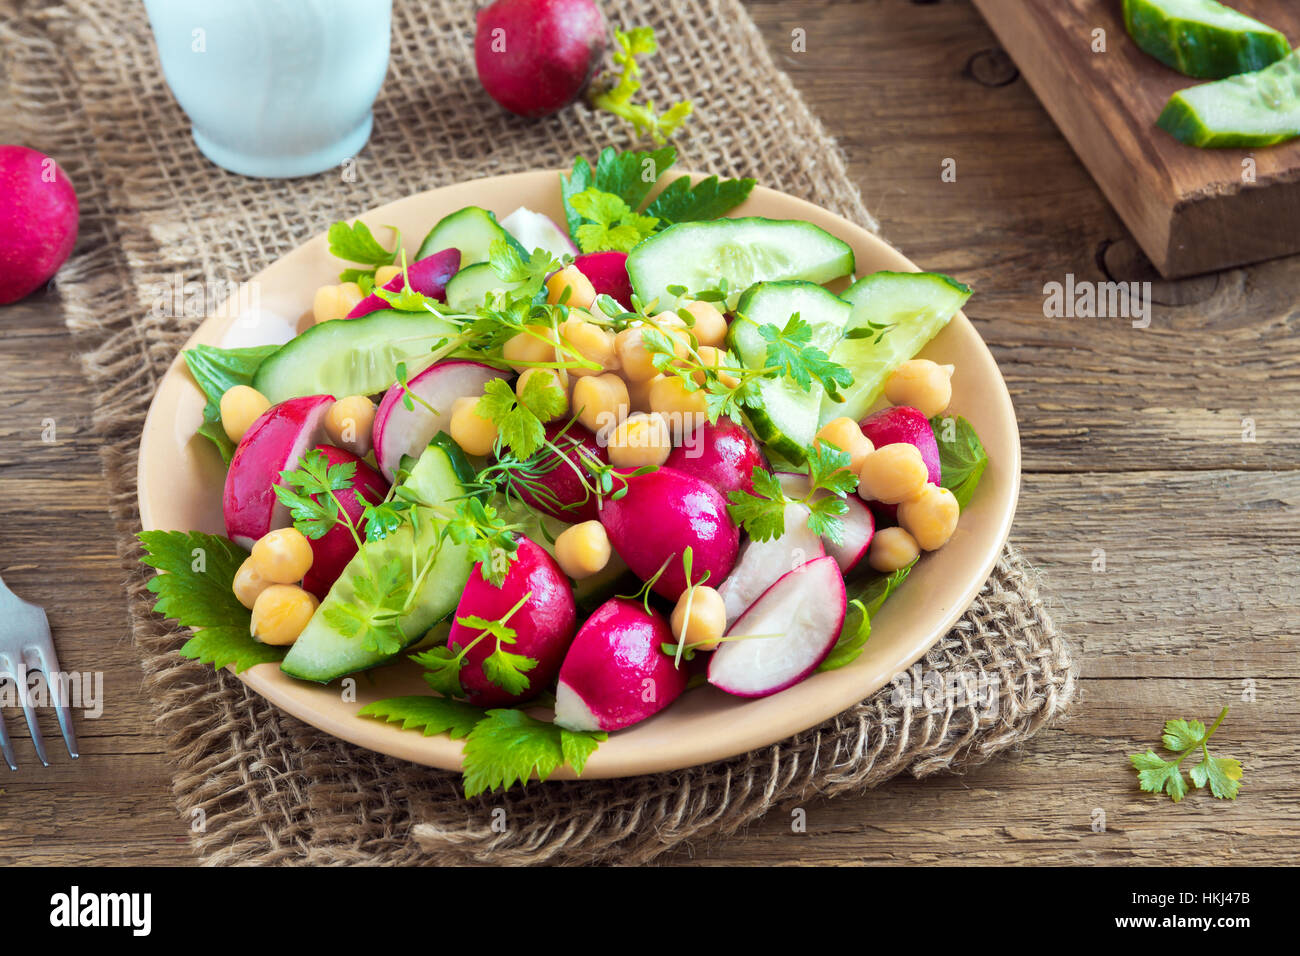 Healthy homemade chickpea and vegetables salad, diet, vegetarian, vegan food, spring detox snack Stock Photo